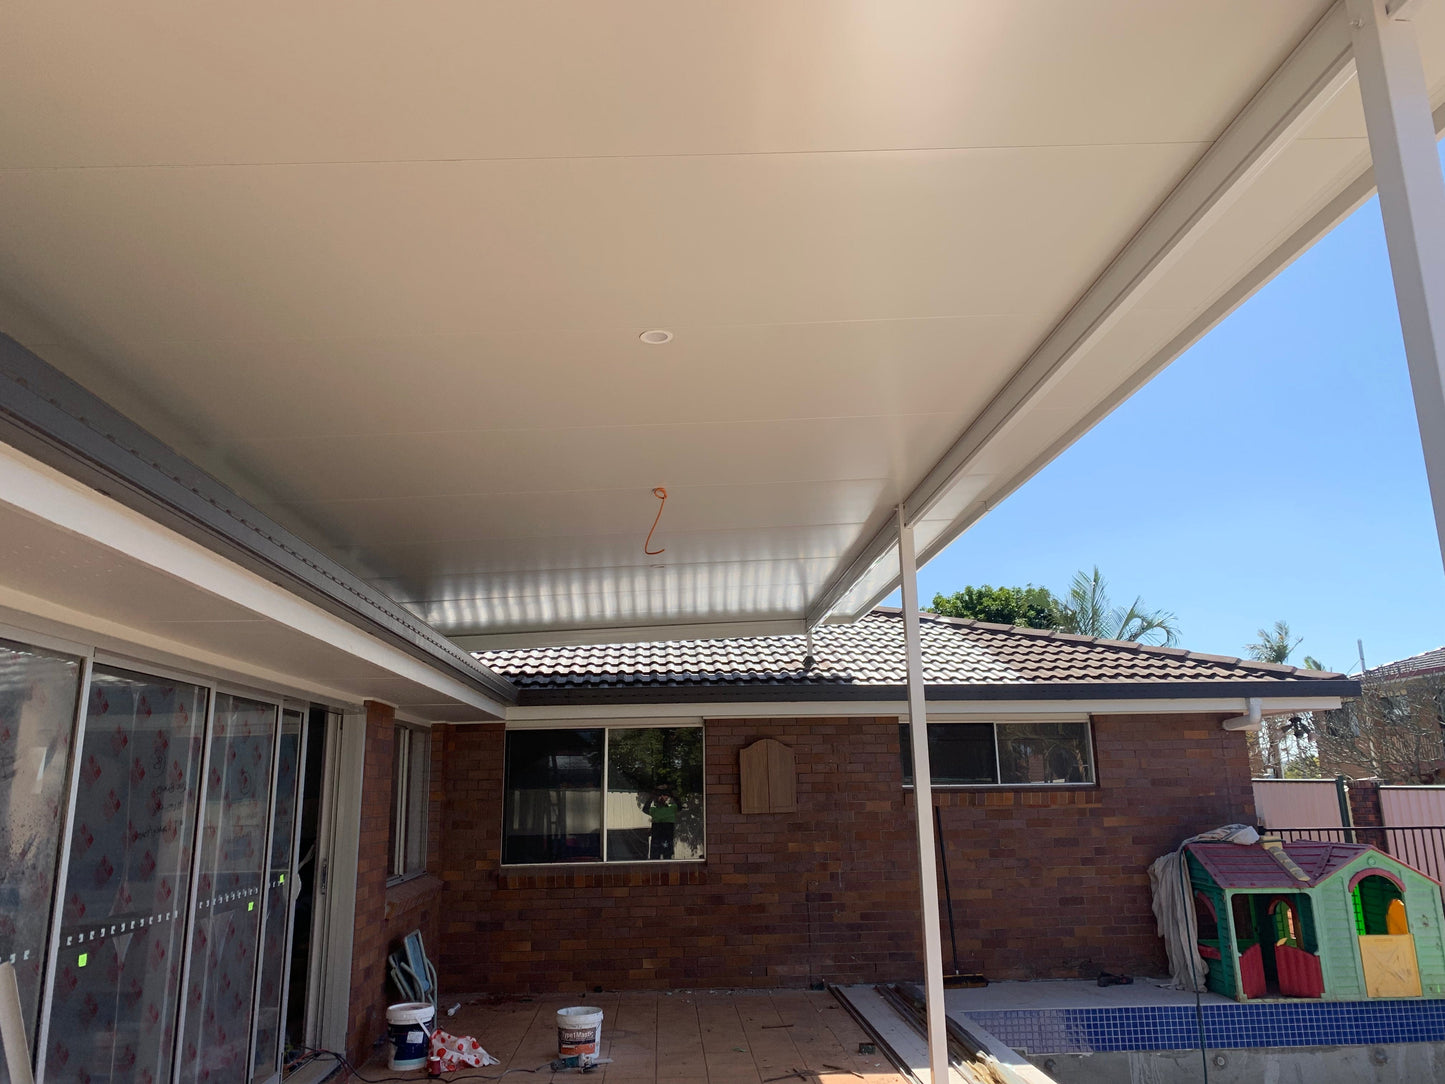 SmartKits Australia Insulated Flyover Roof- 14m (L) x 4m (W).